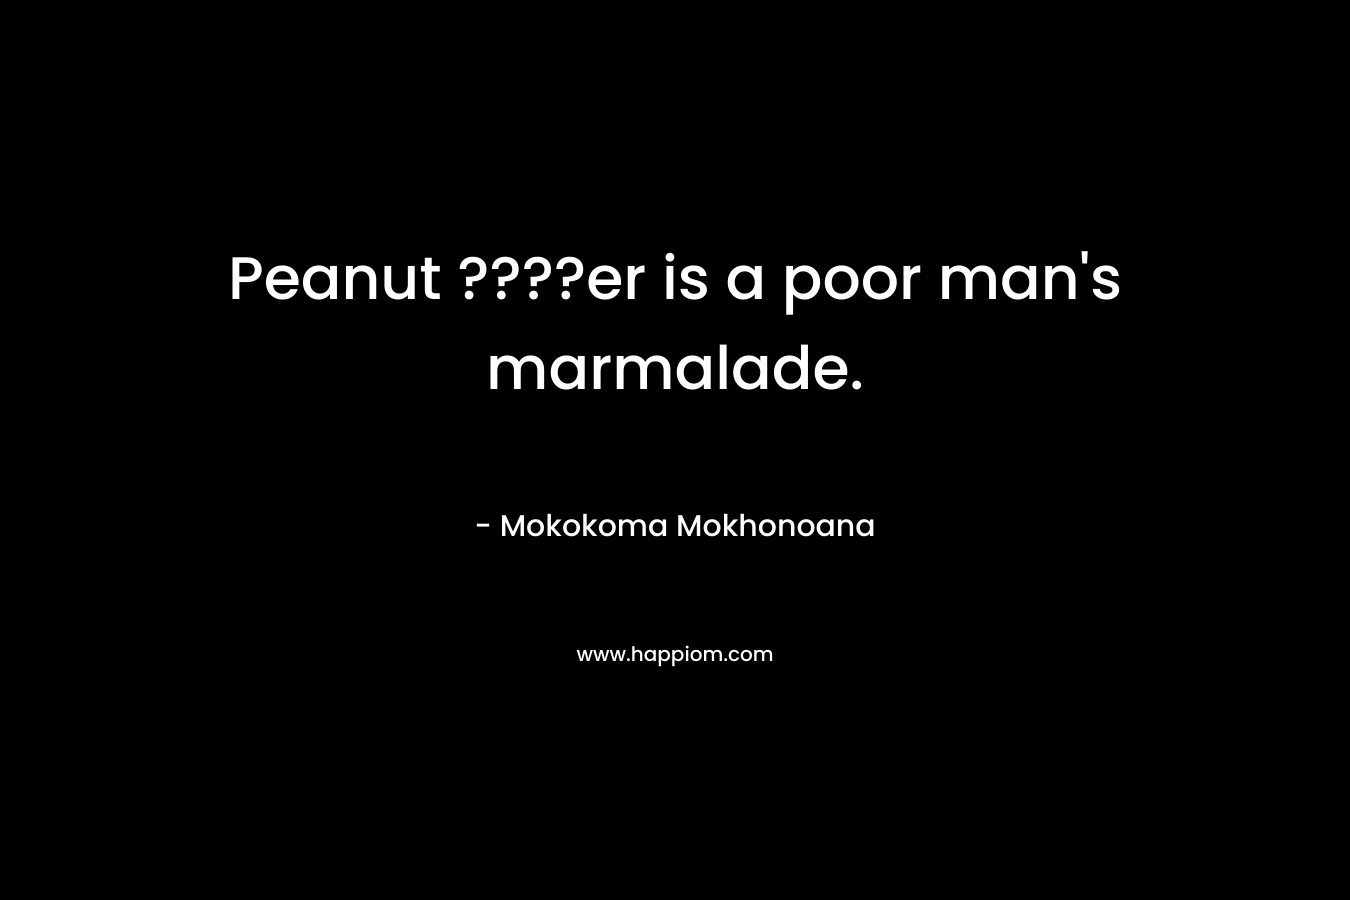 Peanut ????er is a poor man's marmalade.